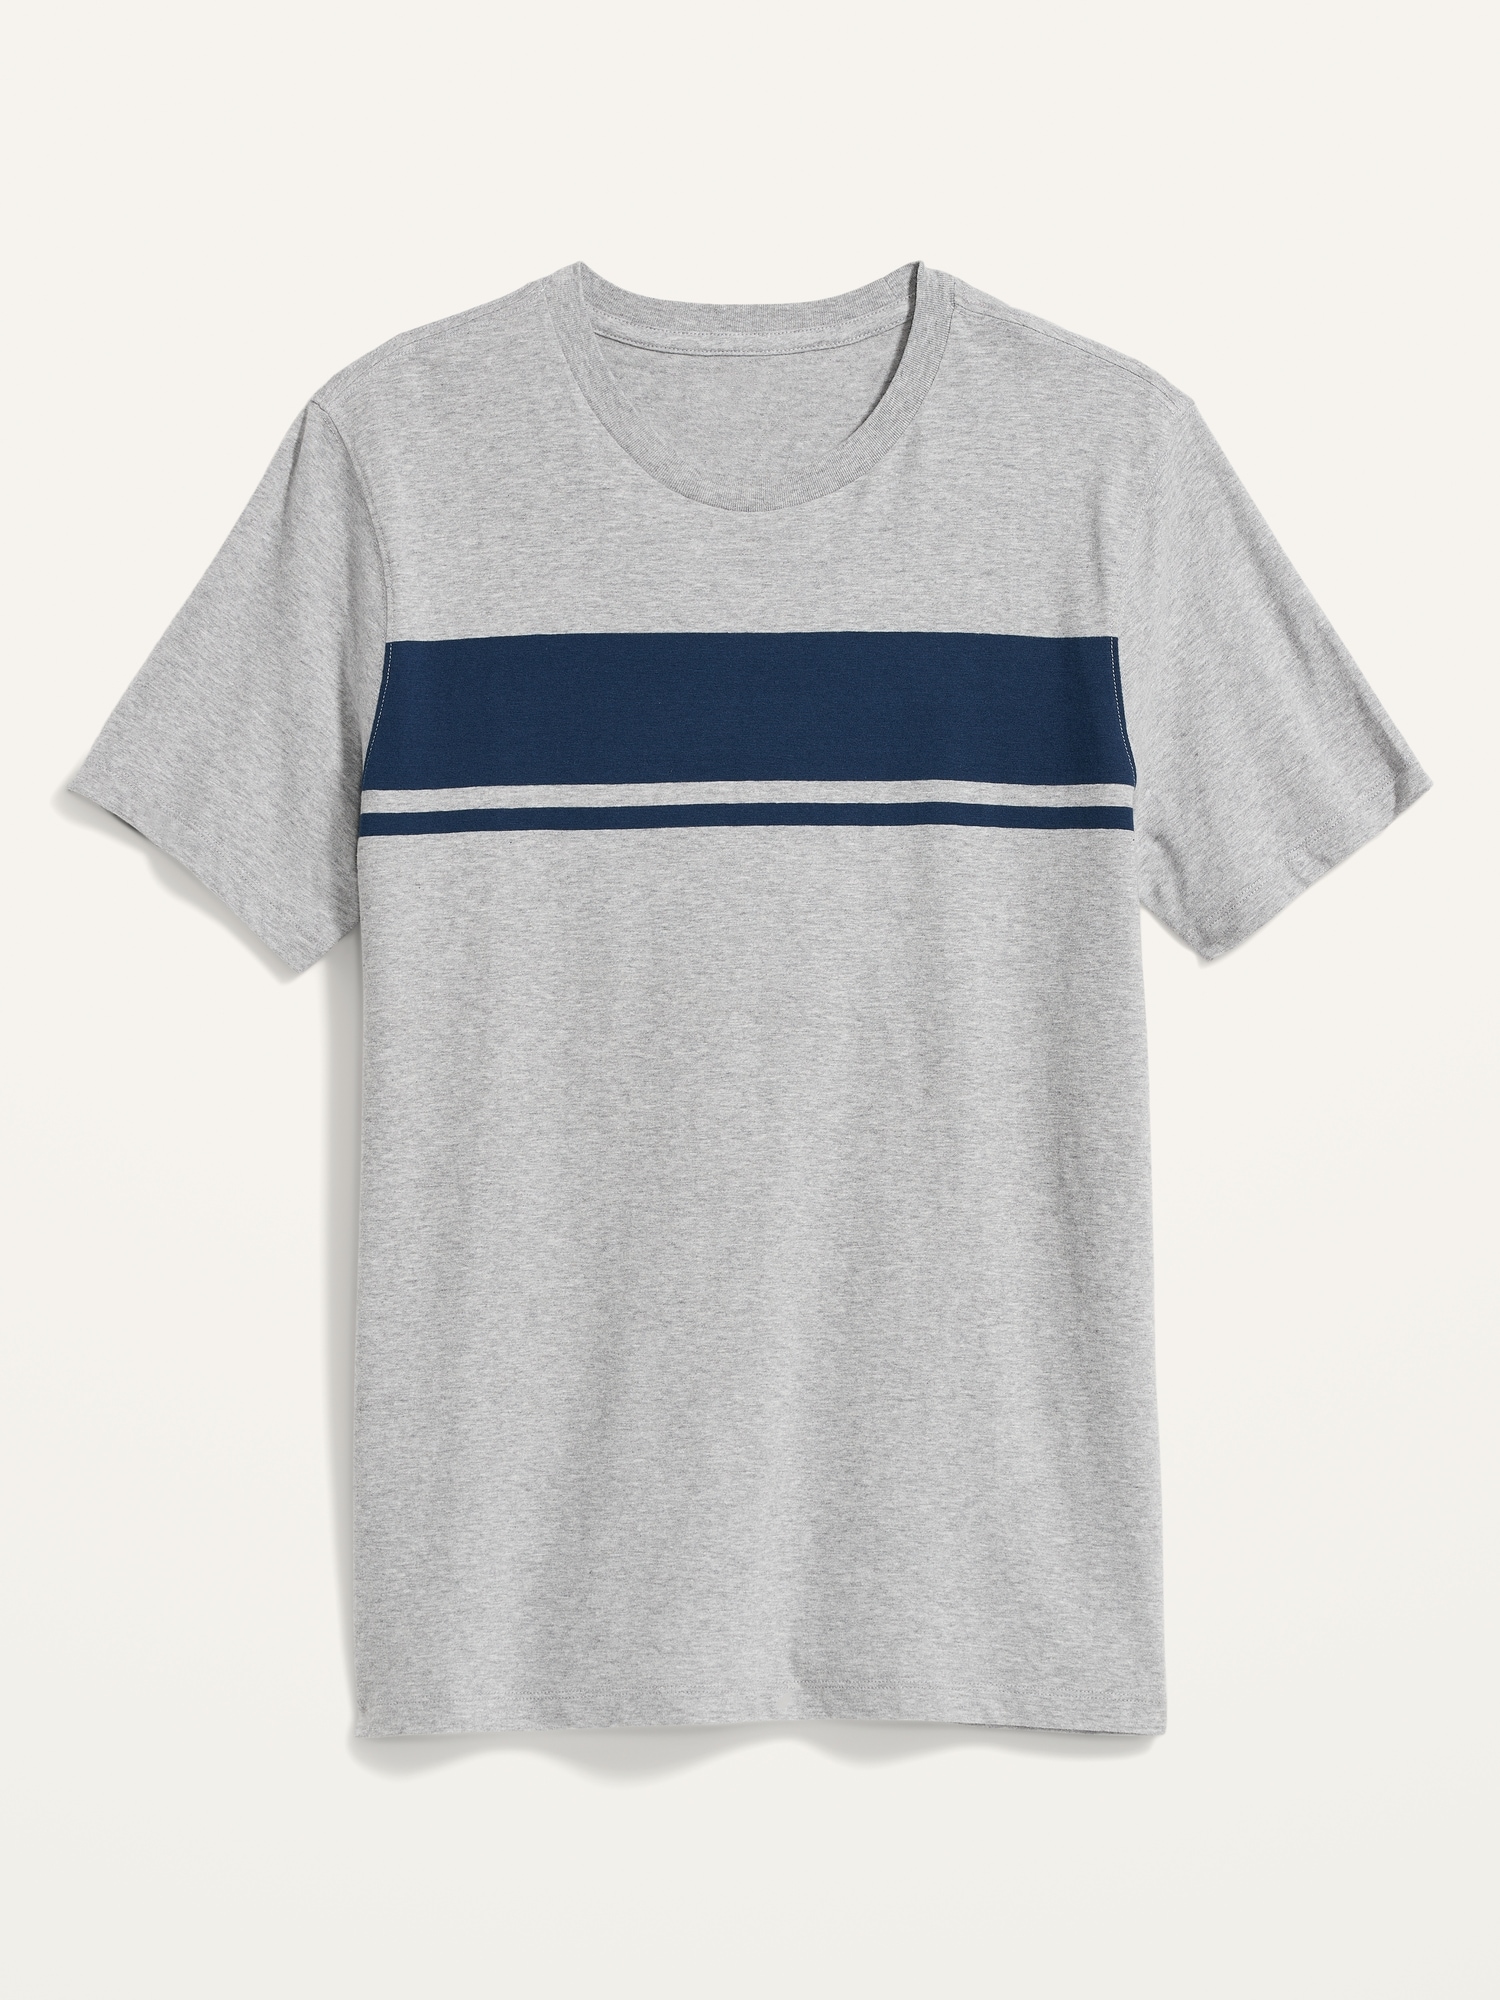 Soft-Washed Center-Stripe T-Shirt